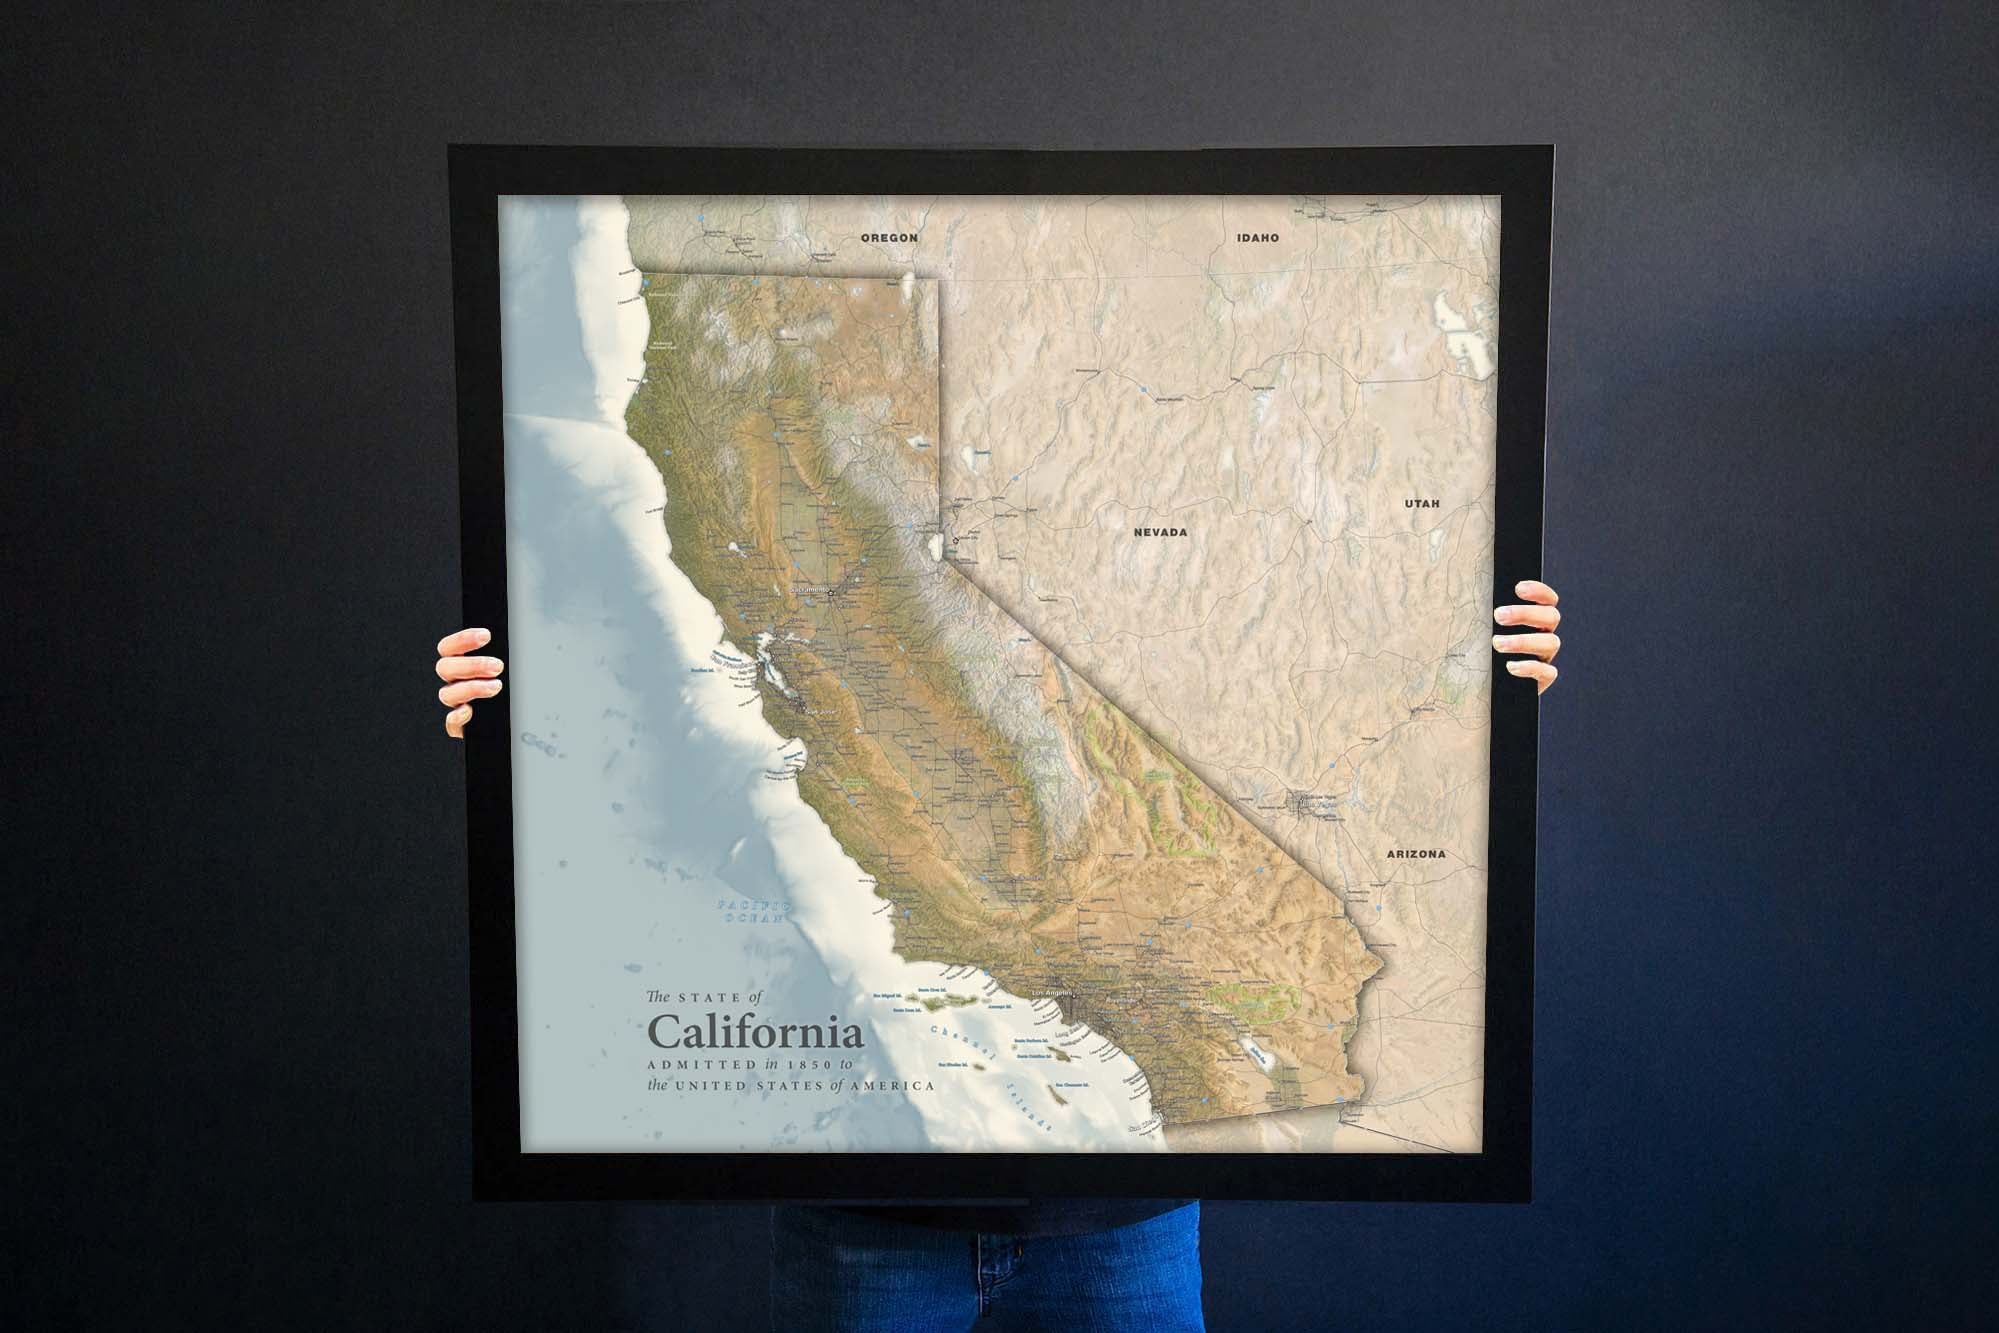 California topo map for wall